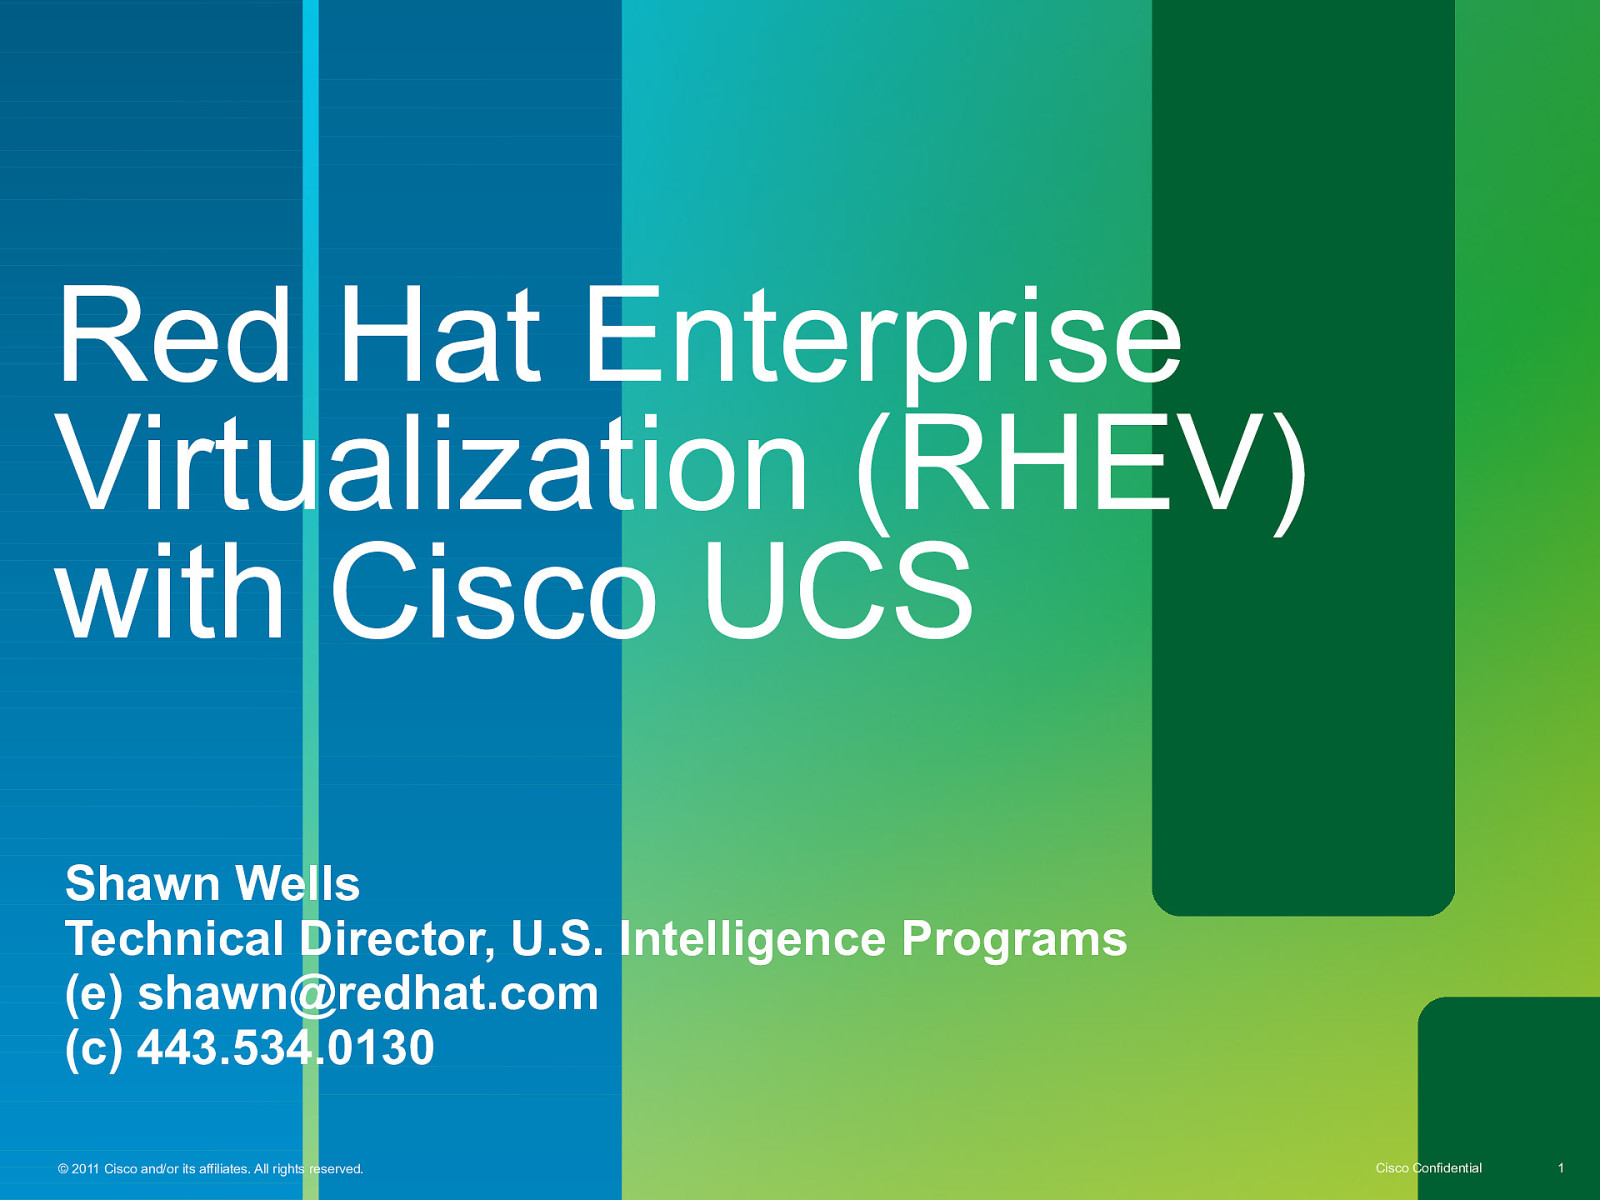 Red Hat Enterprise Virtualization (RHEV) with Cisco UCS